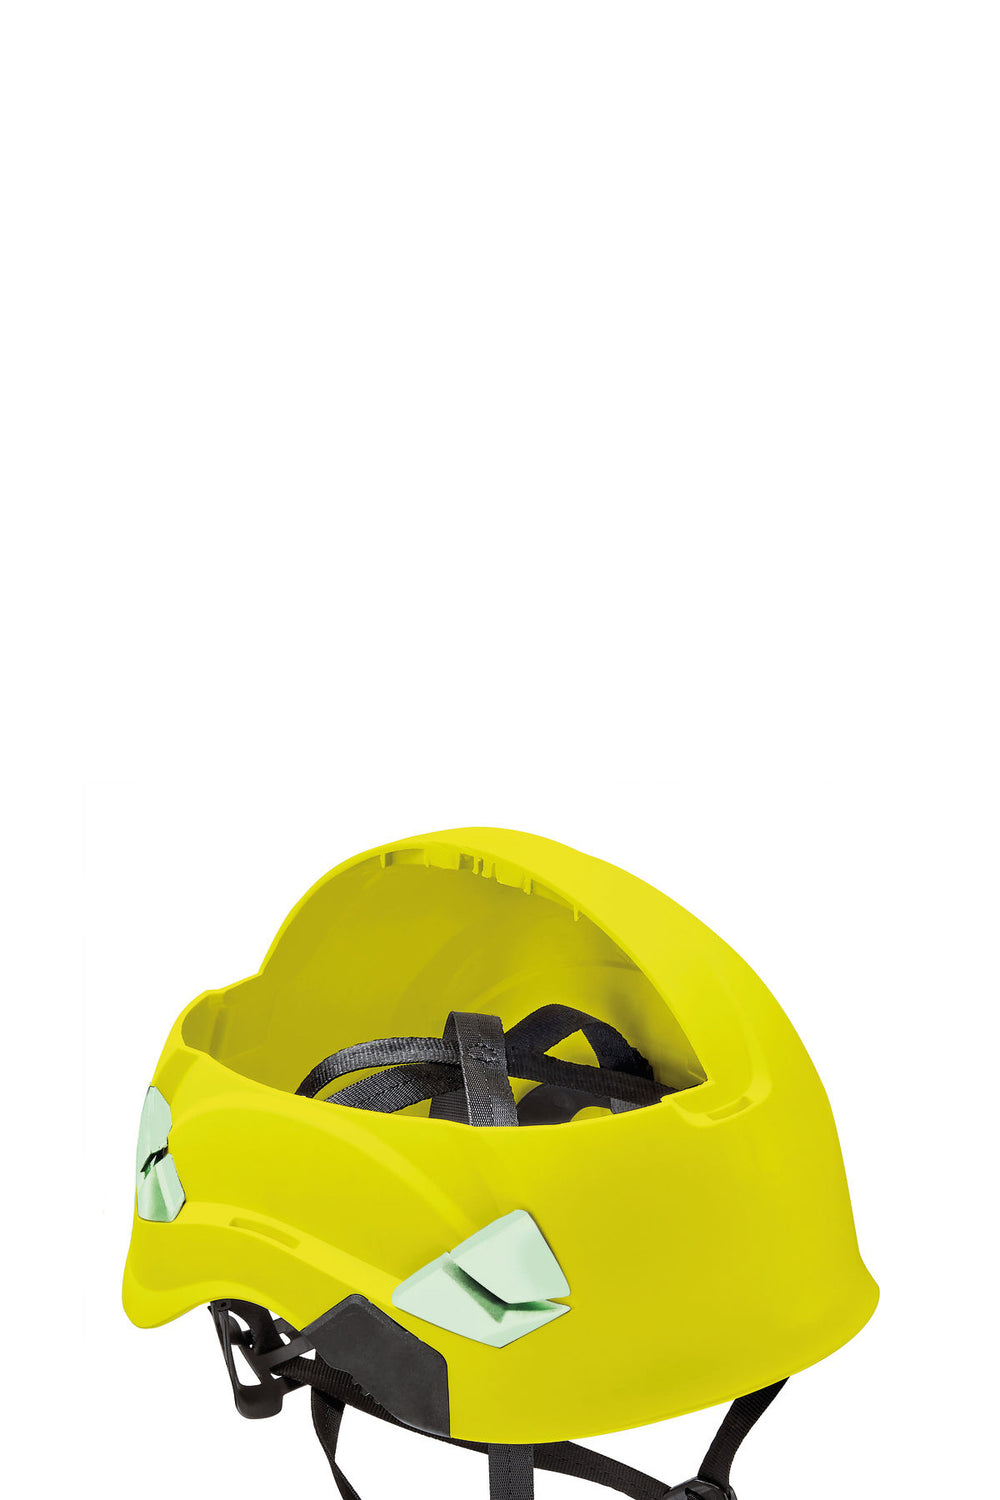 Petzl - Vertex Vent Hi-Viz Helmet